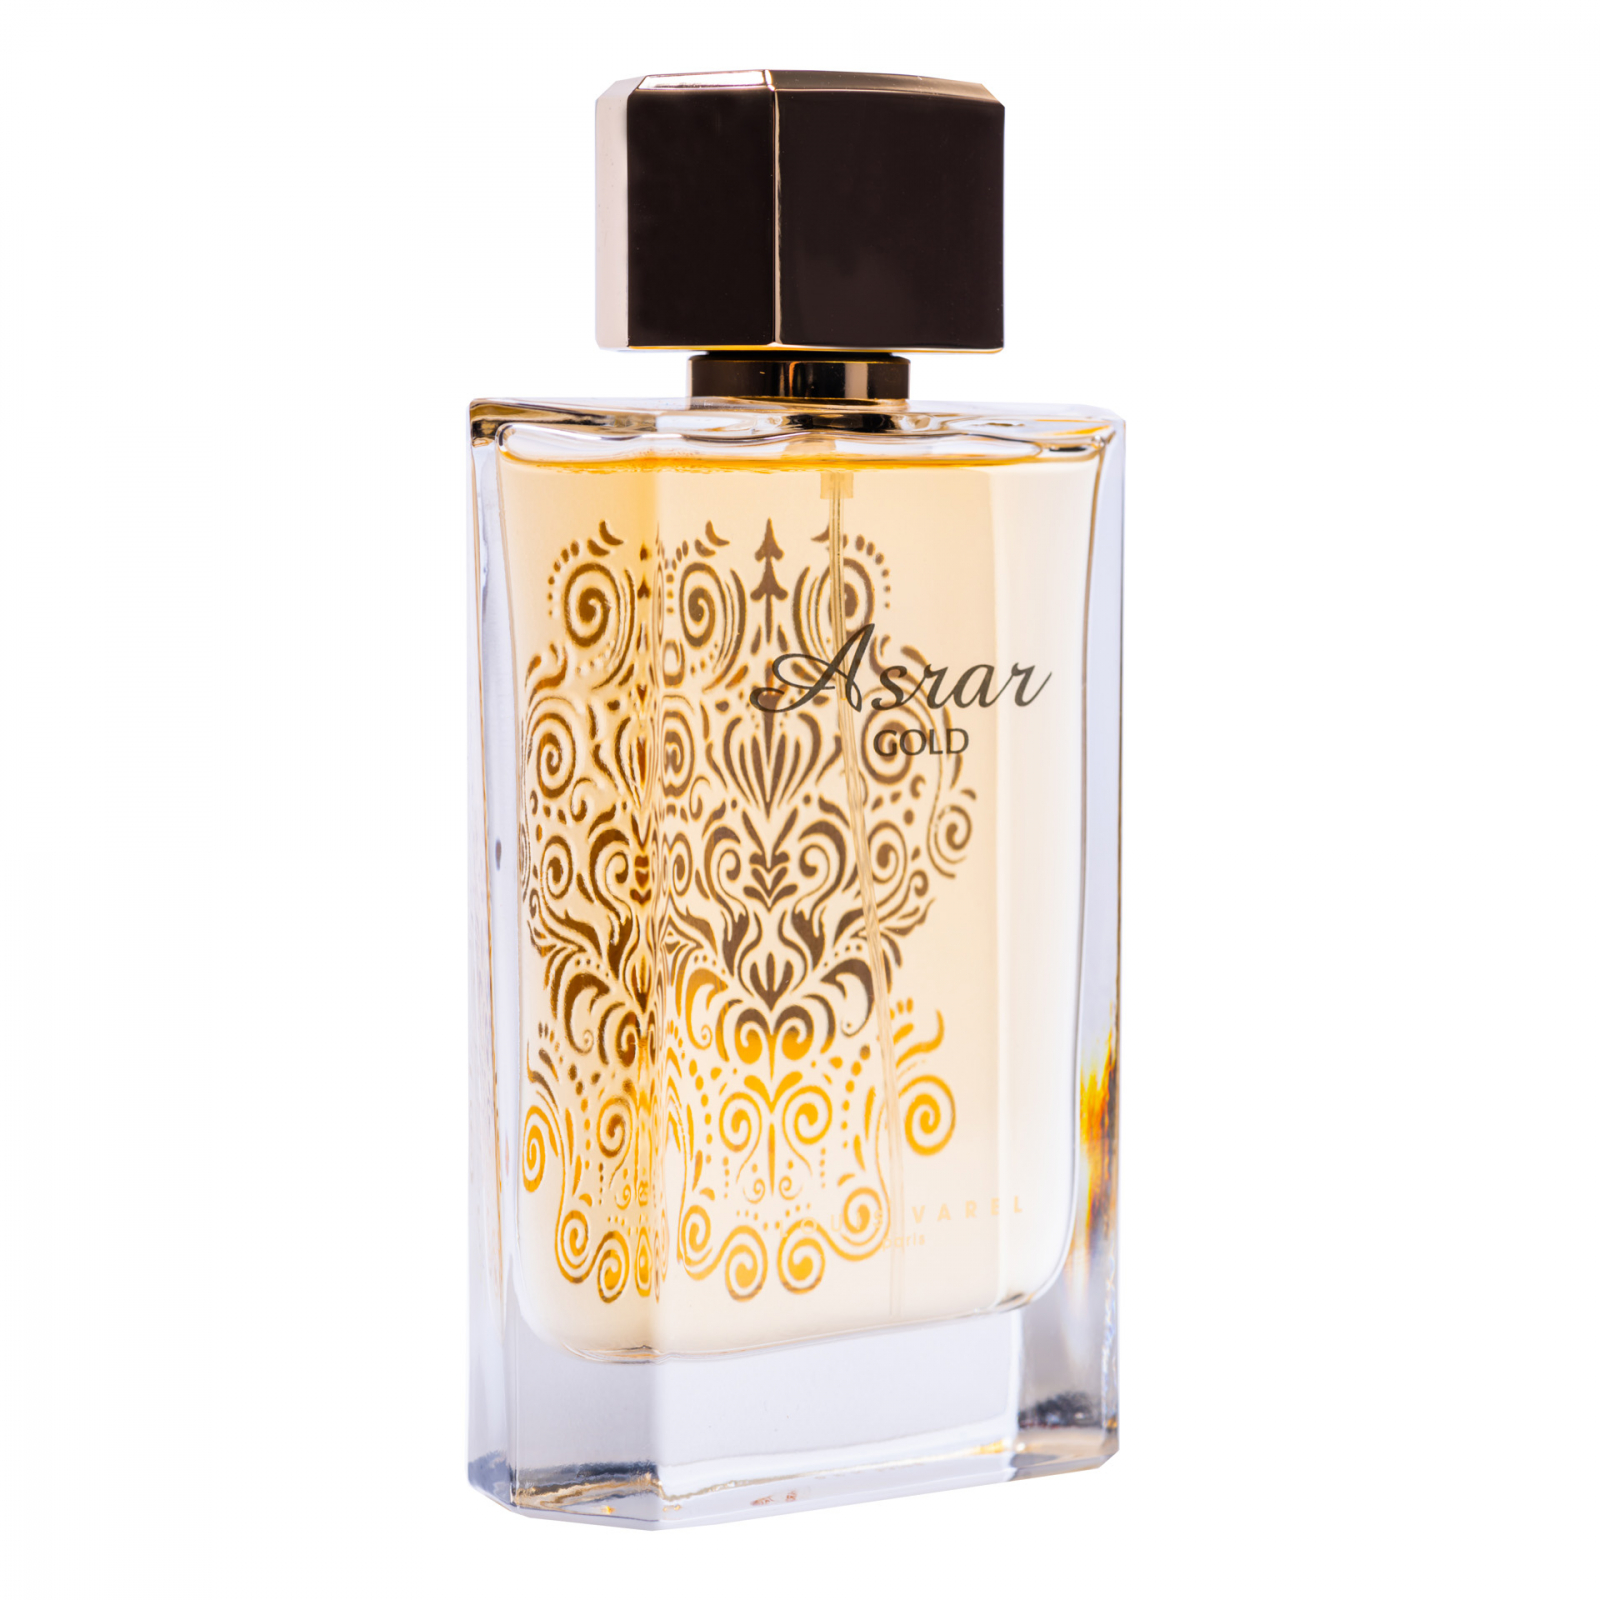 Louis Varel - Asrar Gold fragrance is a journey of love